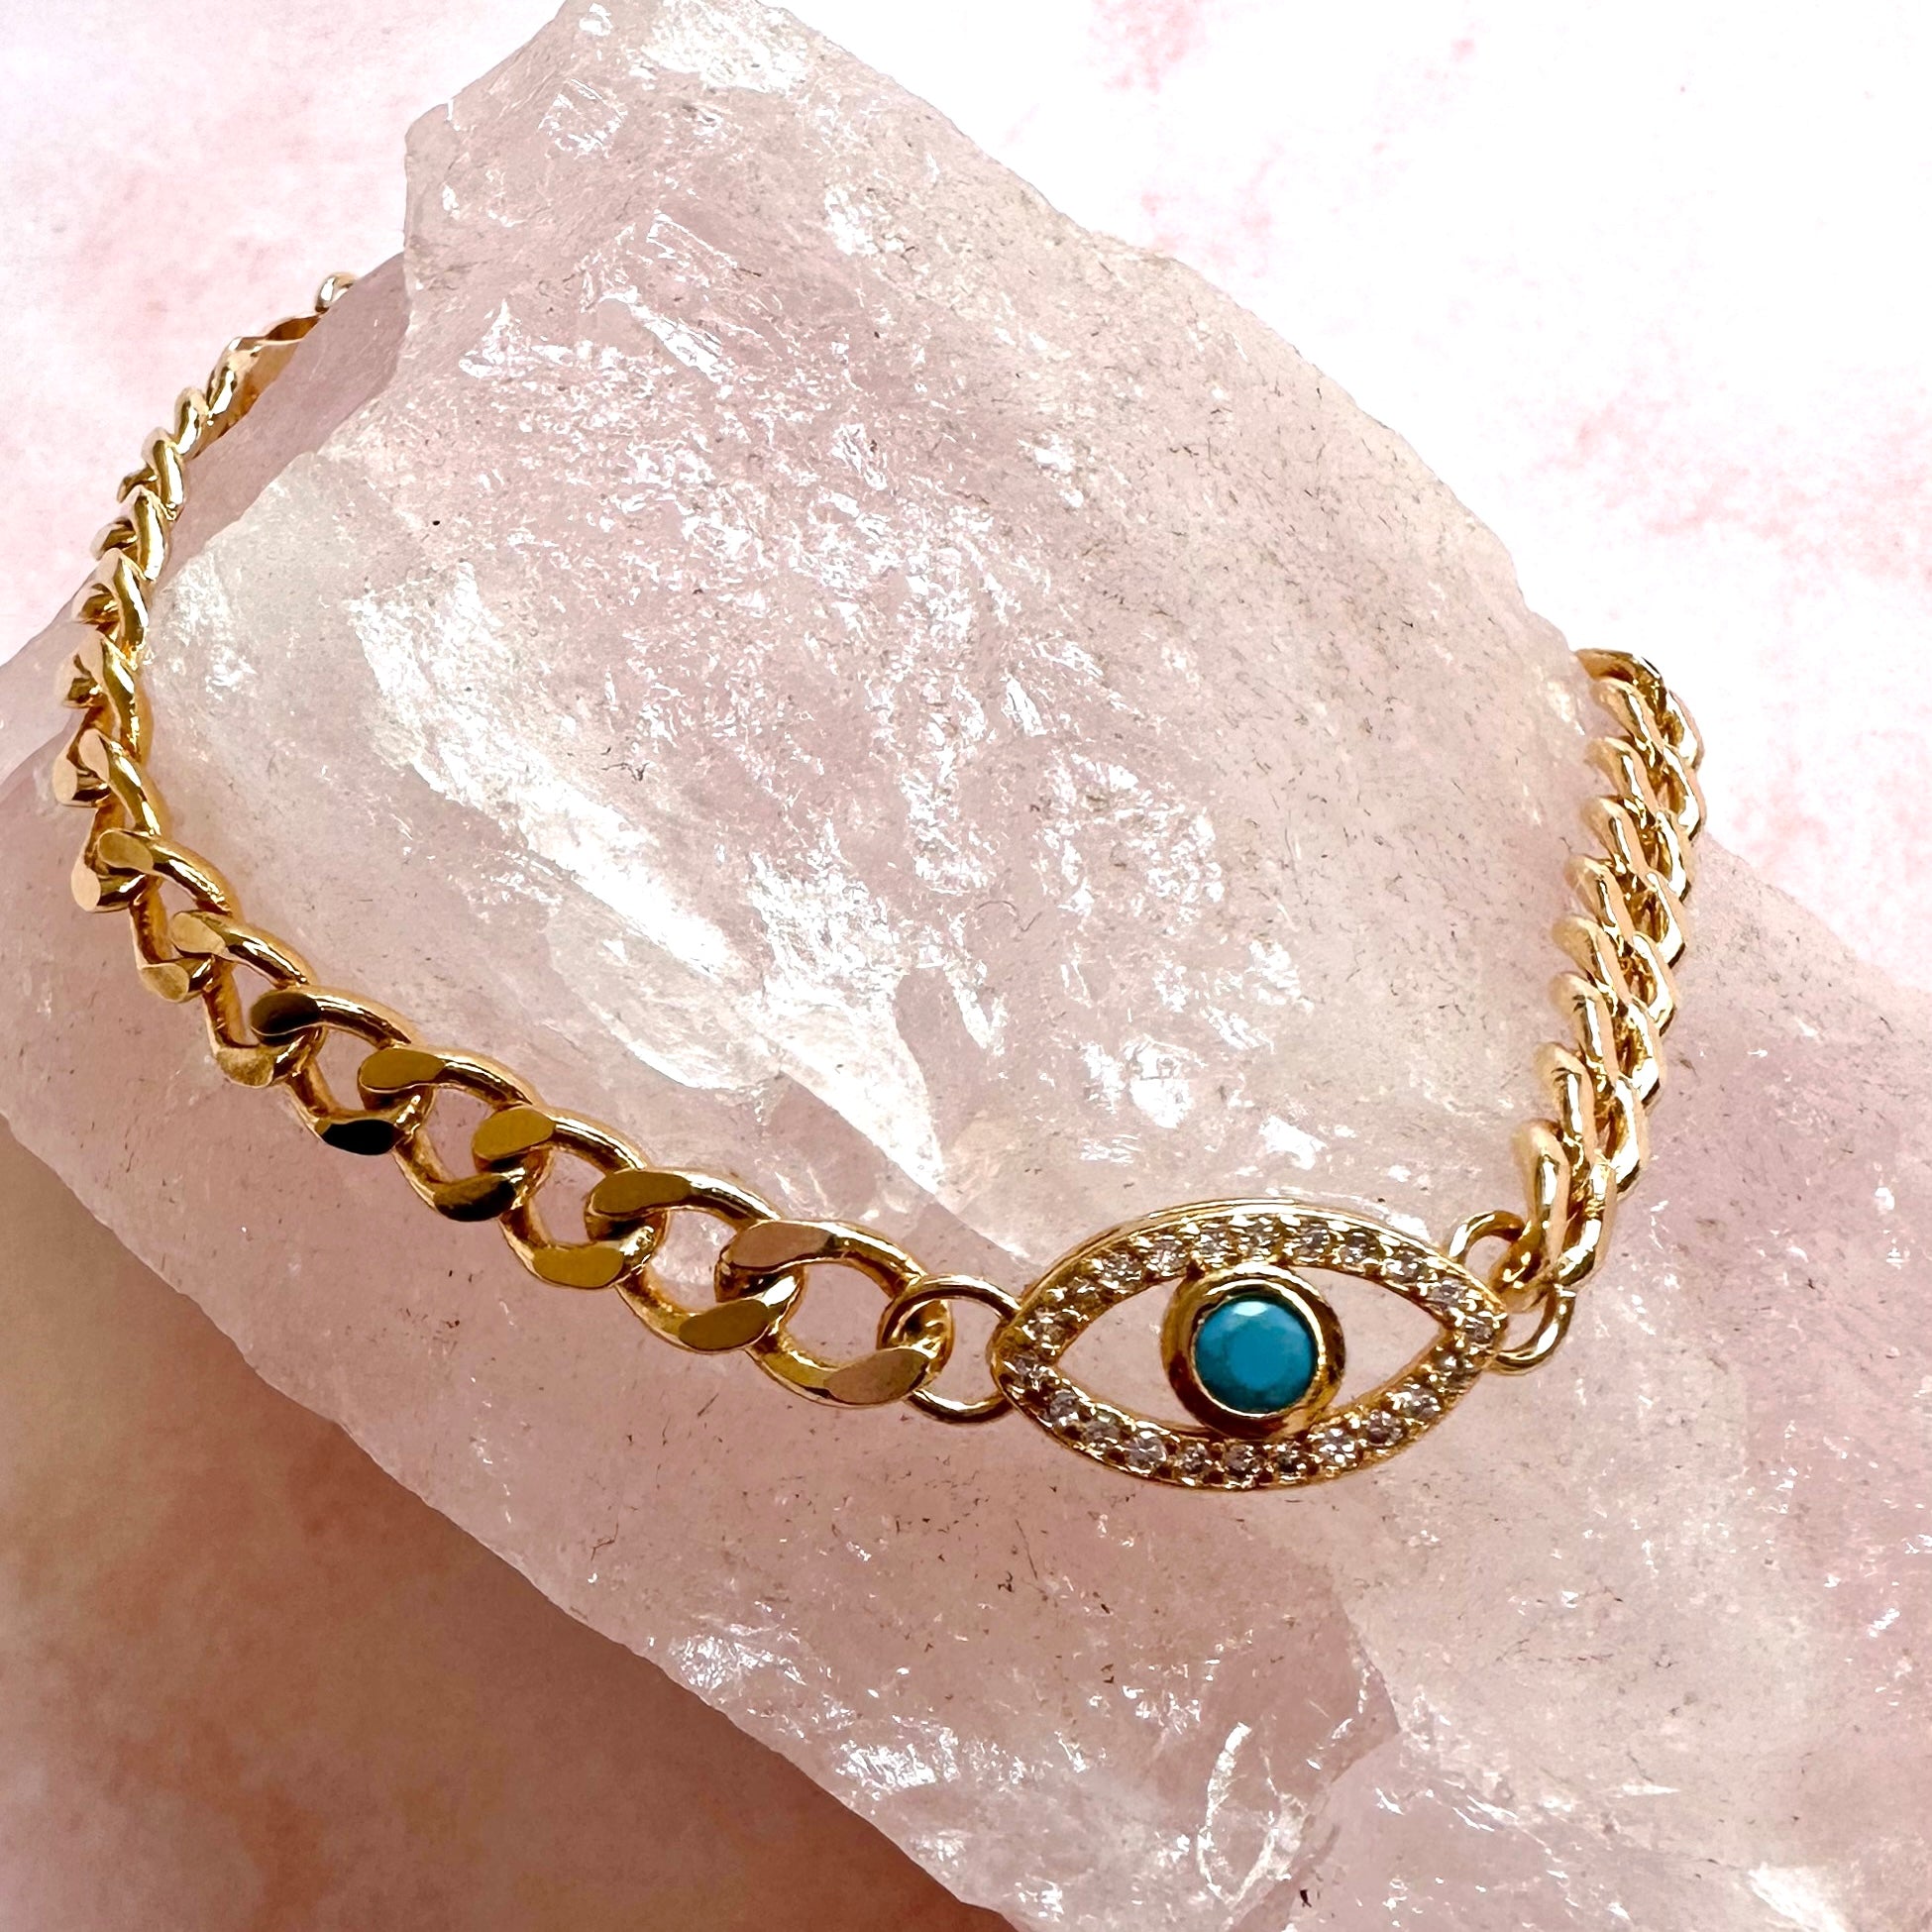 Tuquoise Eye Greek Bracelet